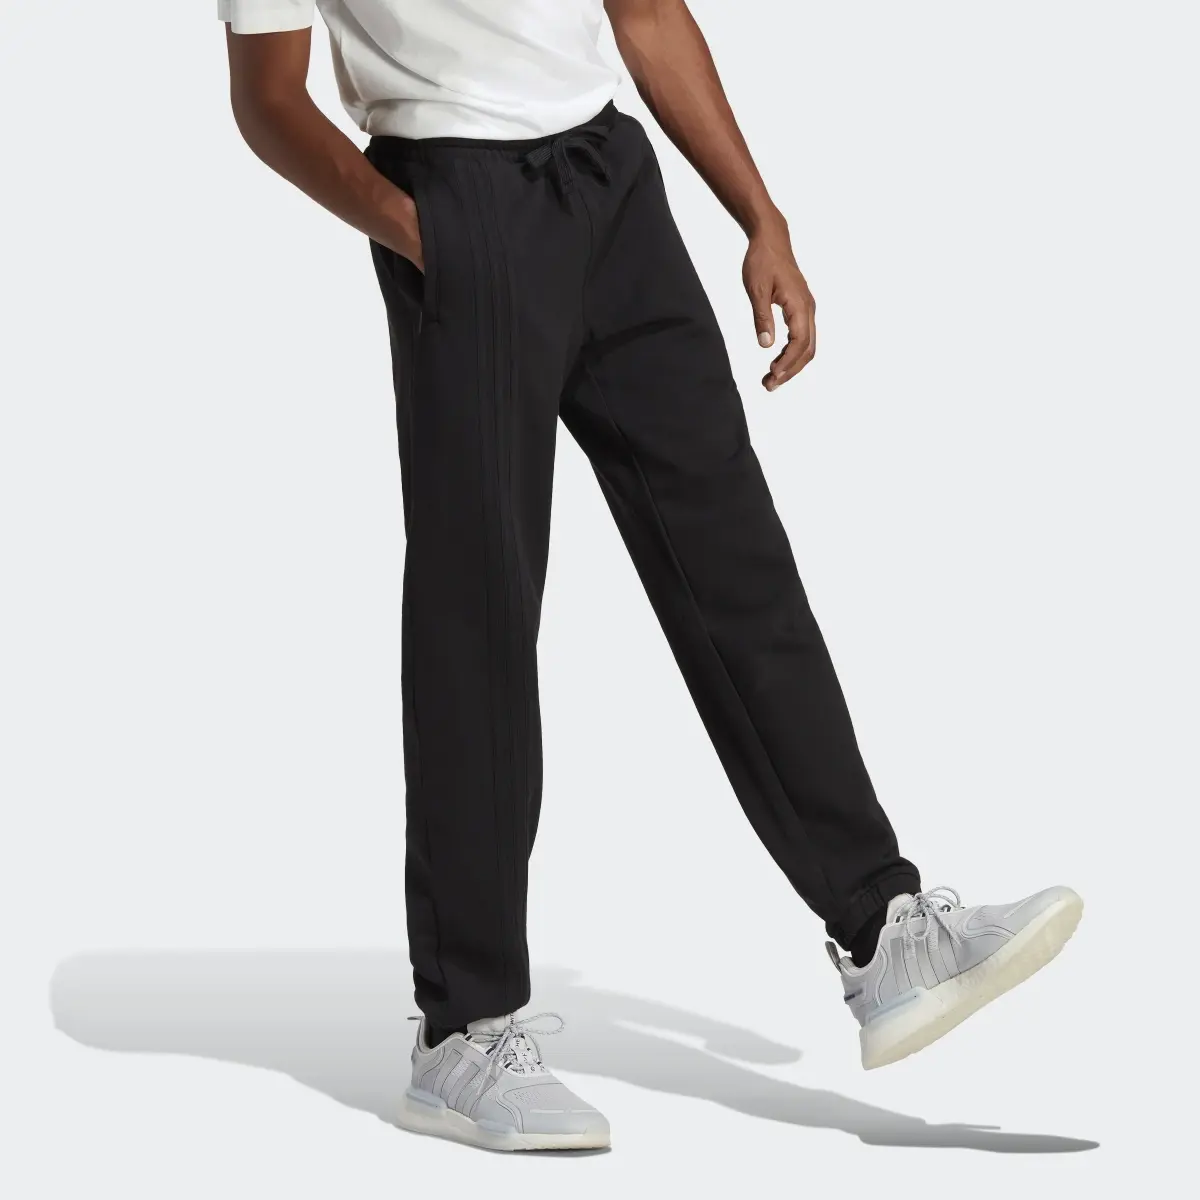 Adidas RIFTA City Boy Essential Sweat Pants. 1